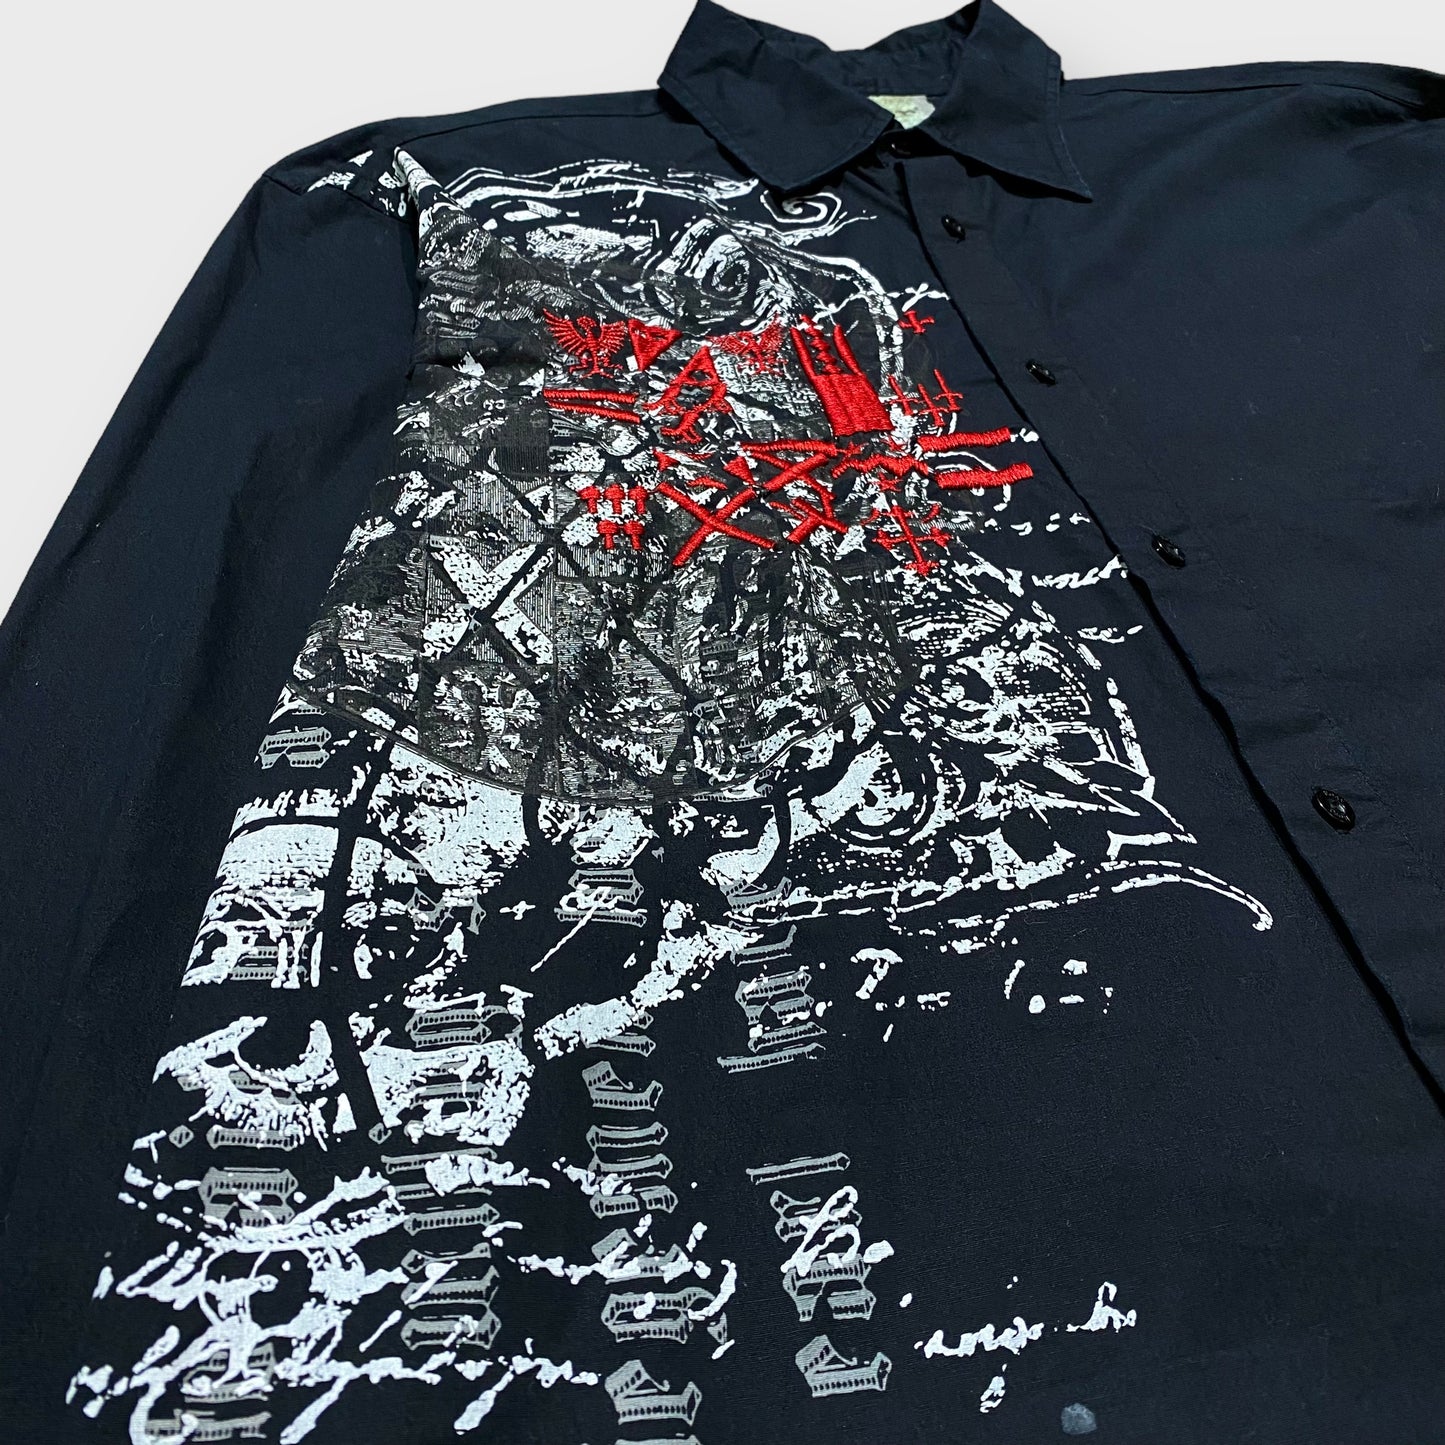 "Roar" Embroidery y2k design shirt